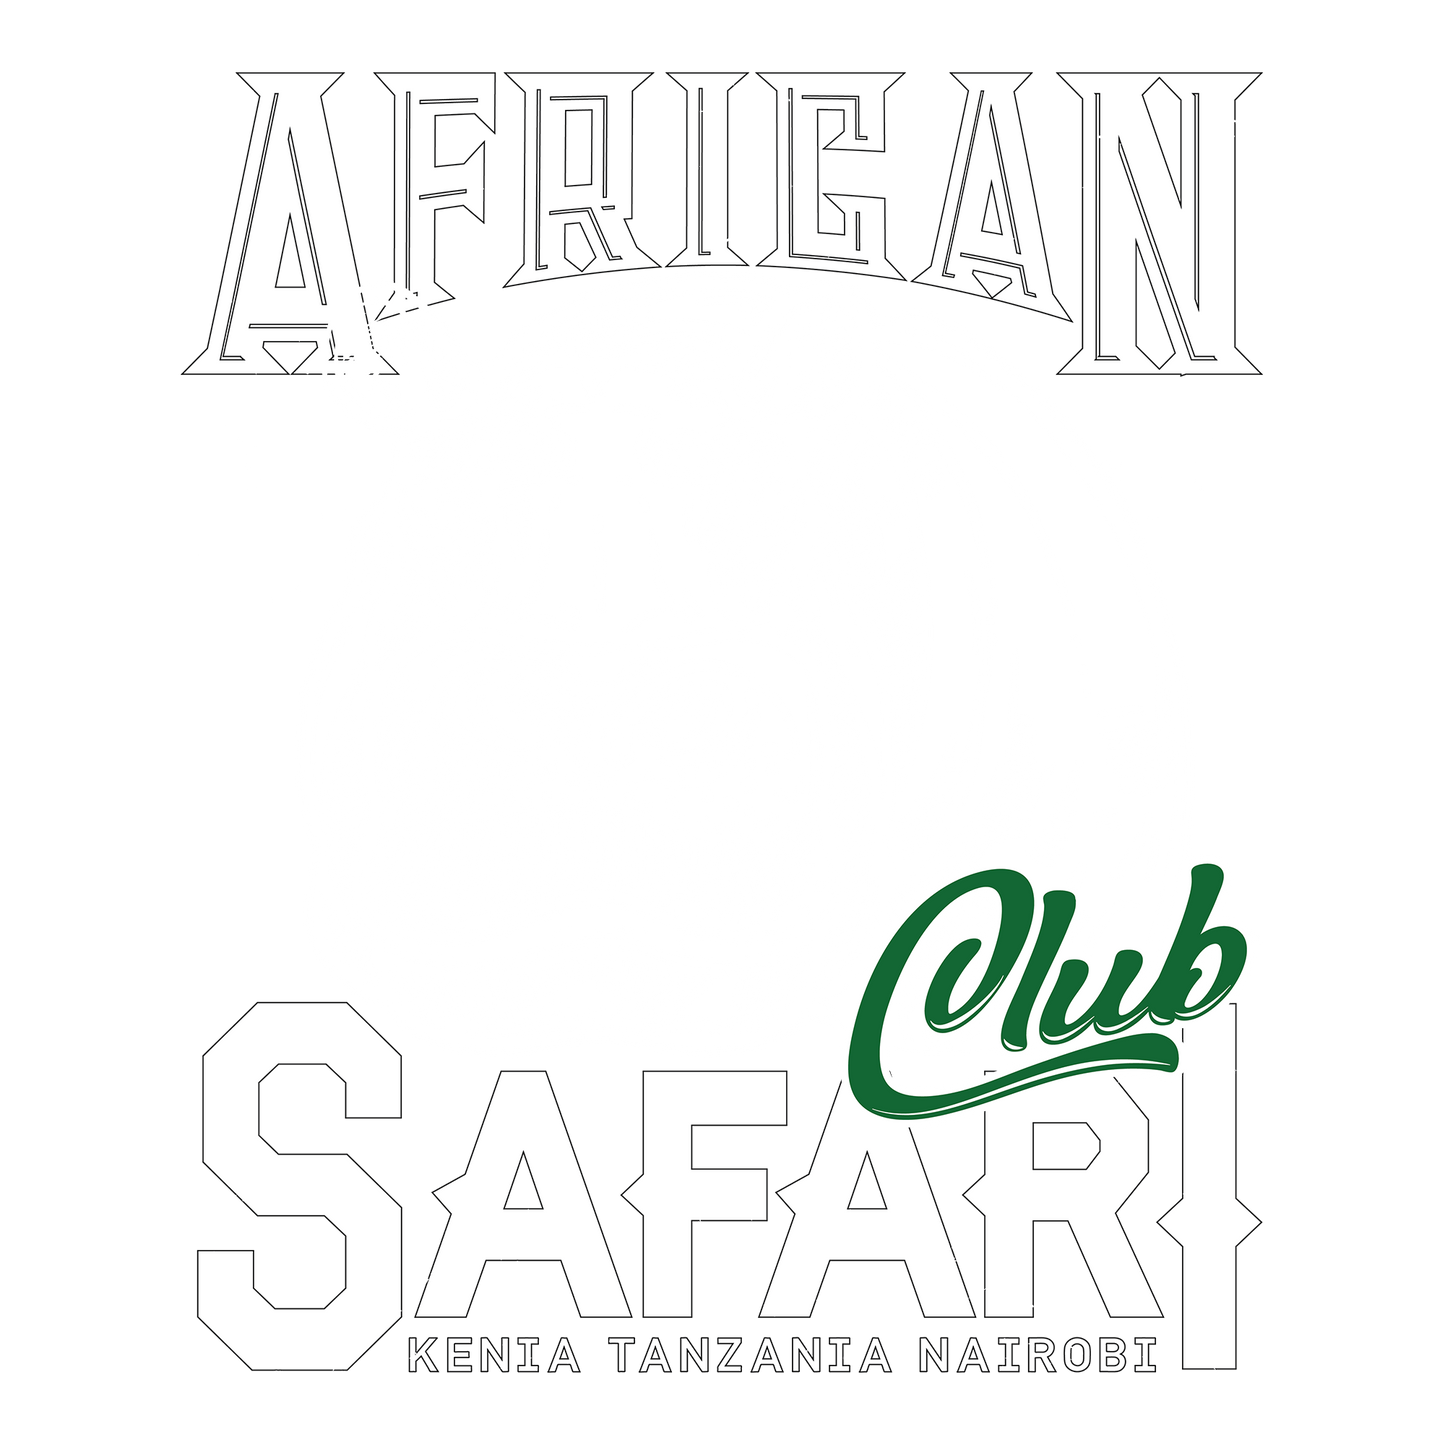 Safari Club DTF Transfer